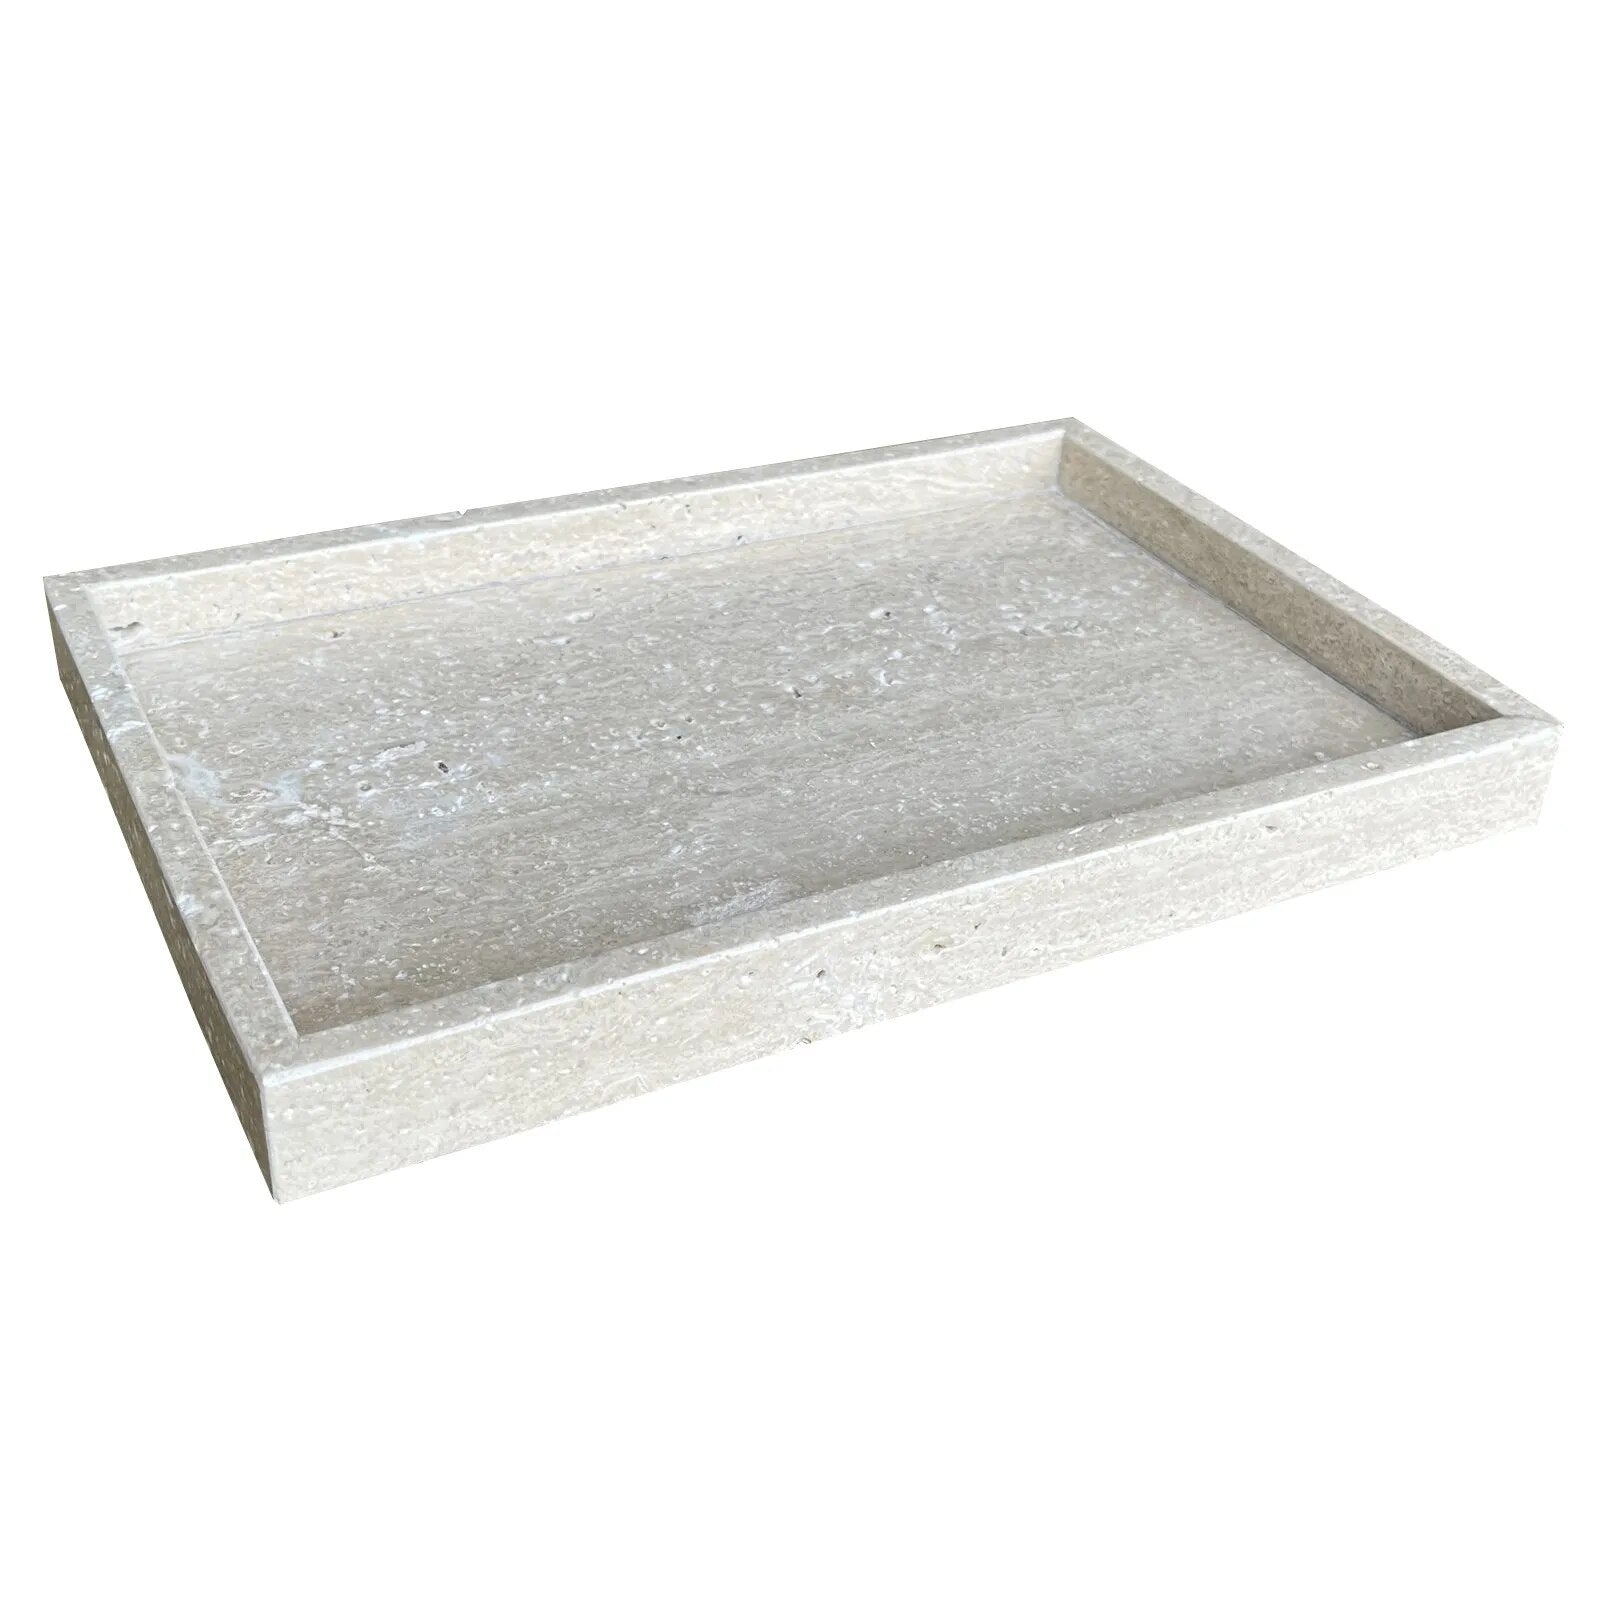 Natural stone tray
30x20x3cm